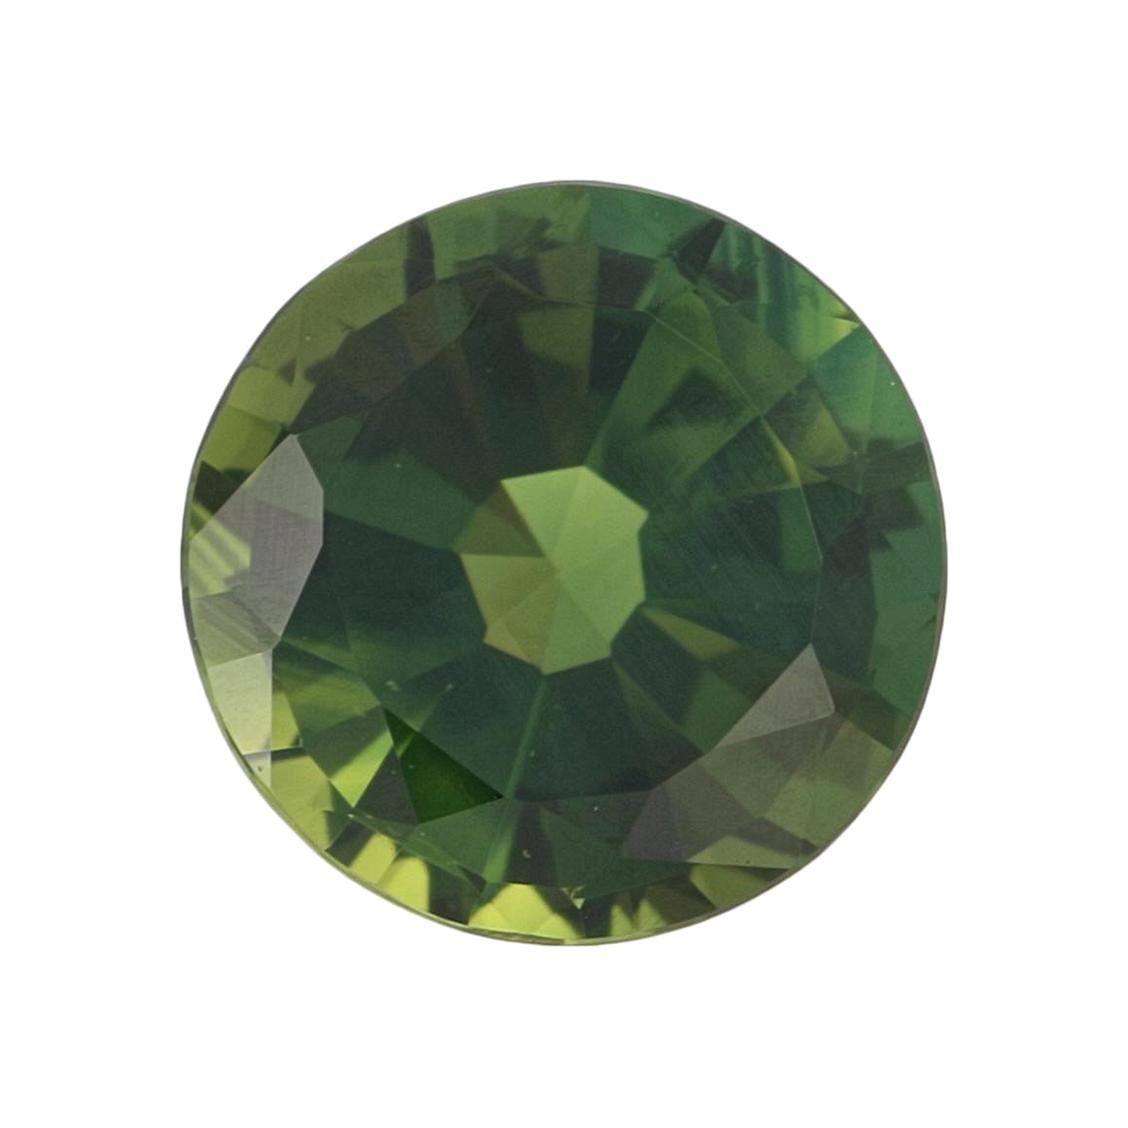 Solitaire en saphir vert non serti de 3,24 carats, taille ronde